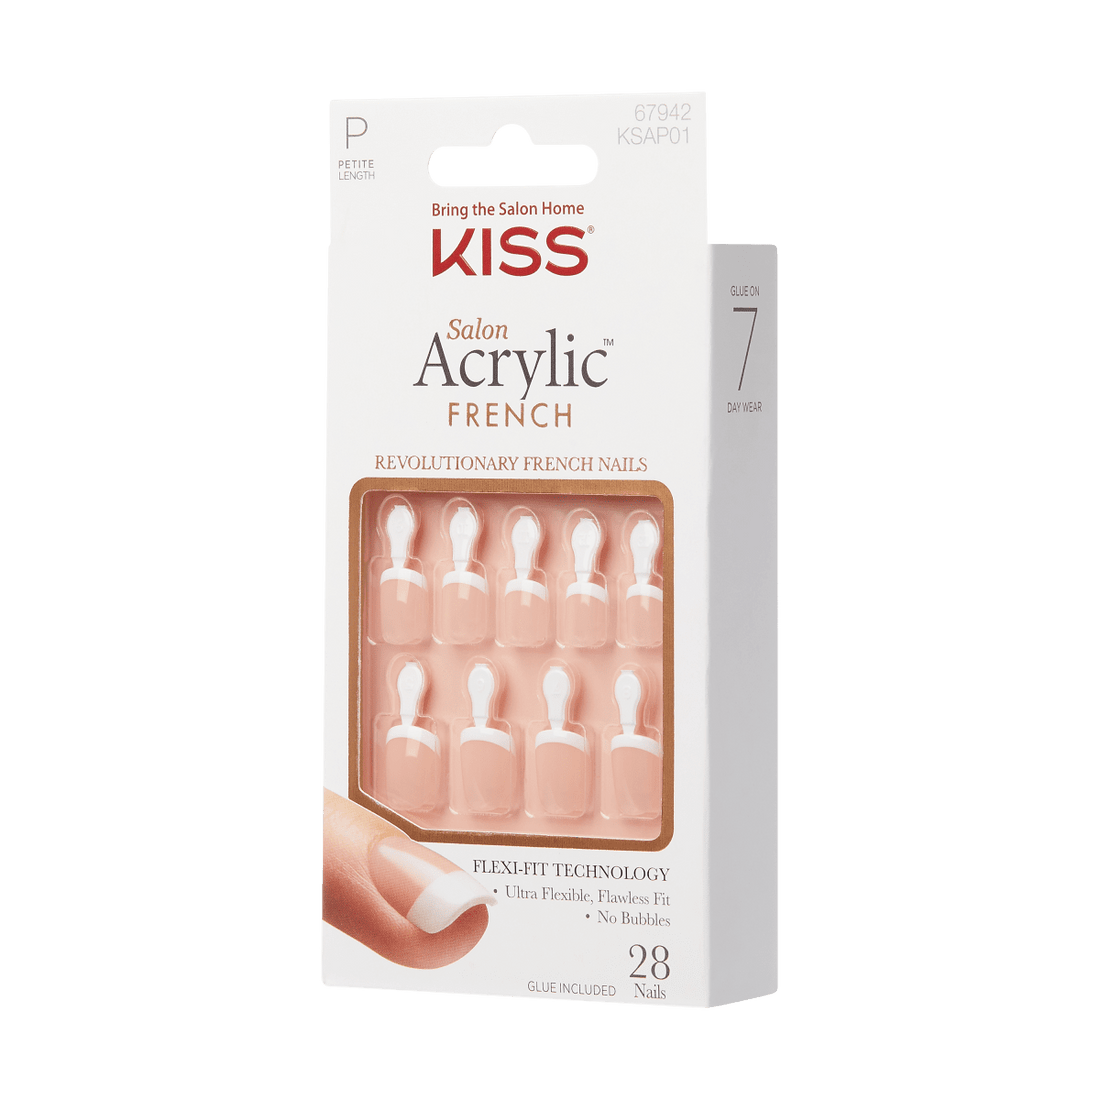 KISS Salon Acrylic French Petite - Crush Hour